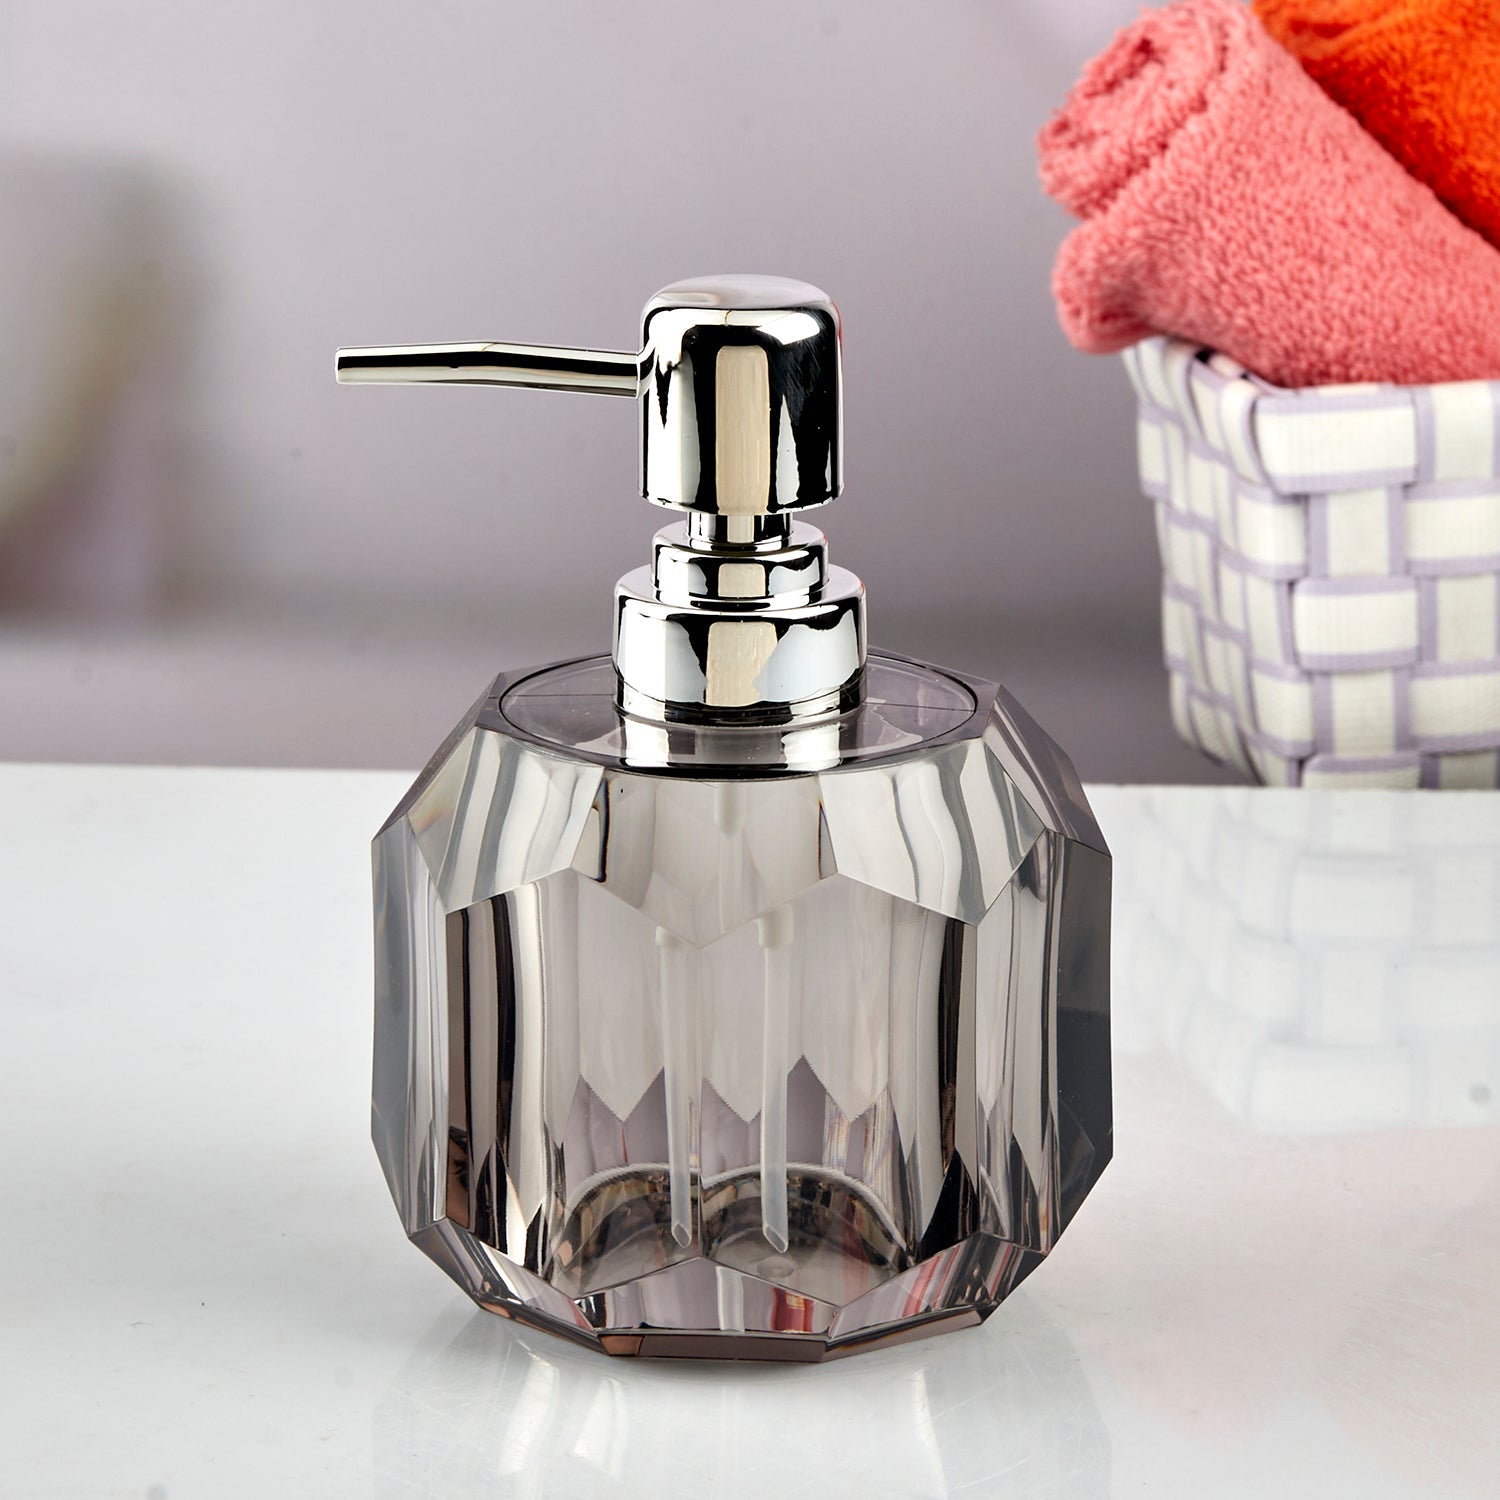 Acrylic Soap Dispenser for Bathroom handwash (10731)